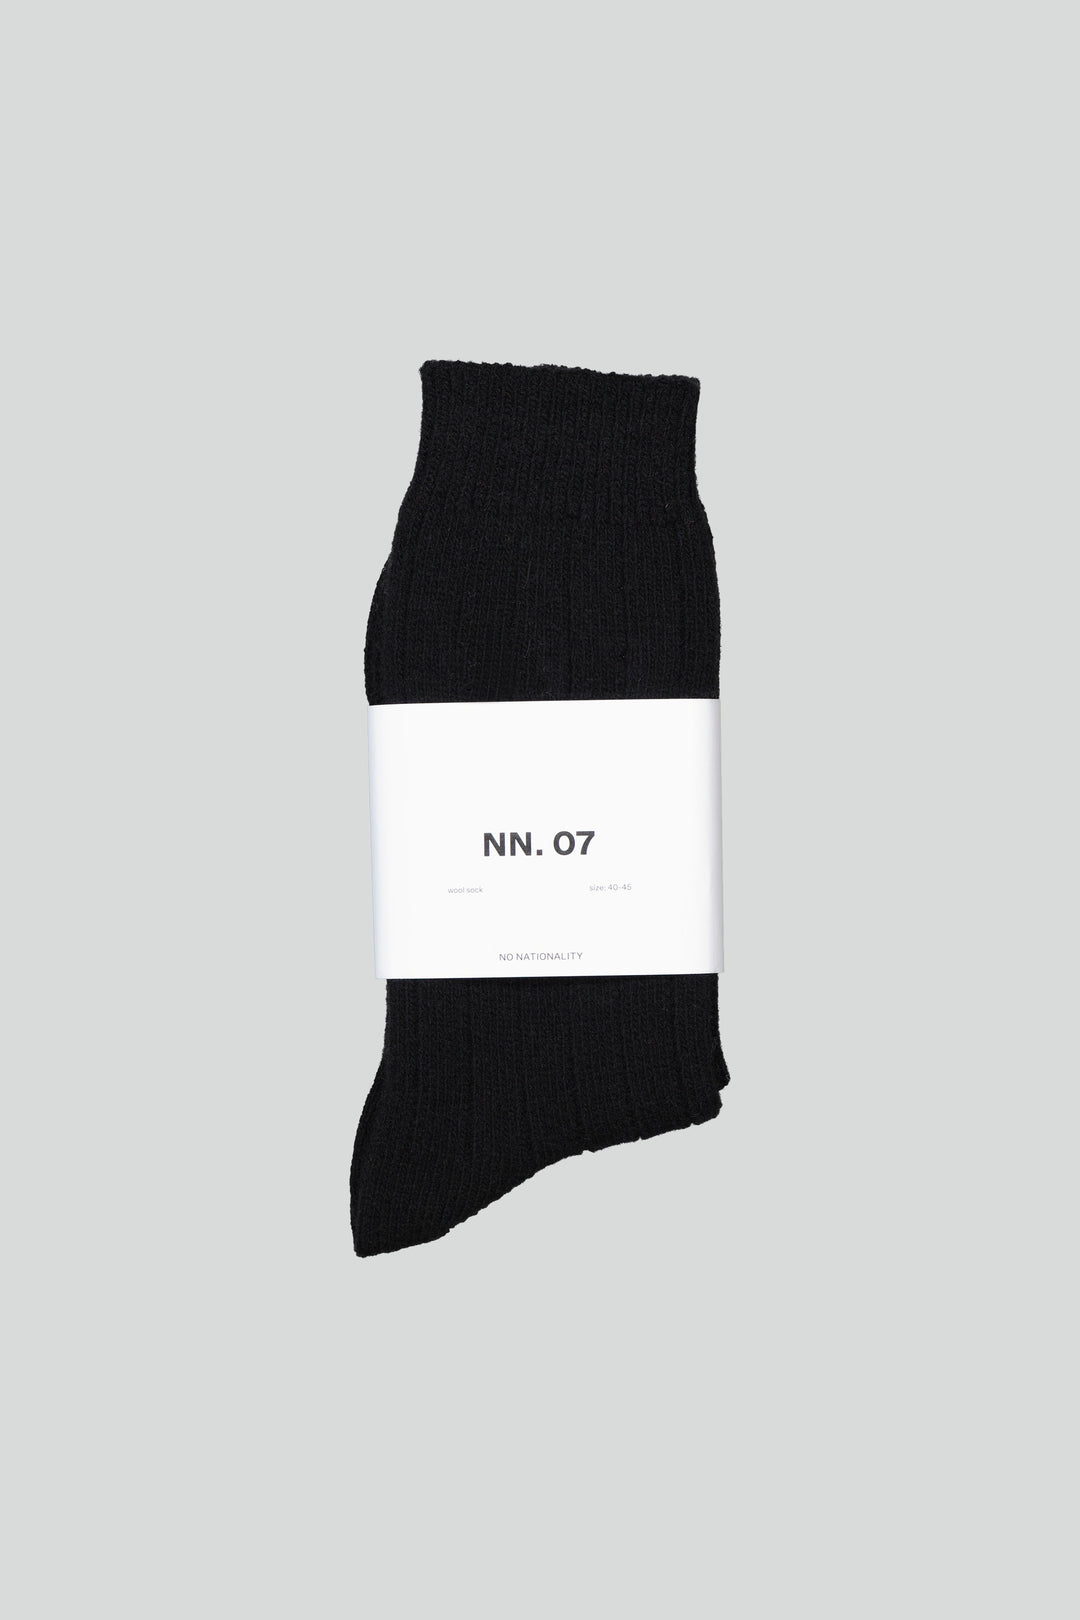 NN07 Sock One Logo 9055 Wool Sock in Black | Buster McGee